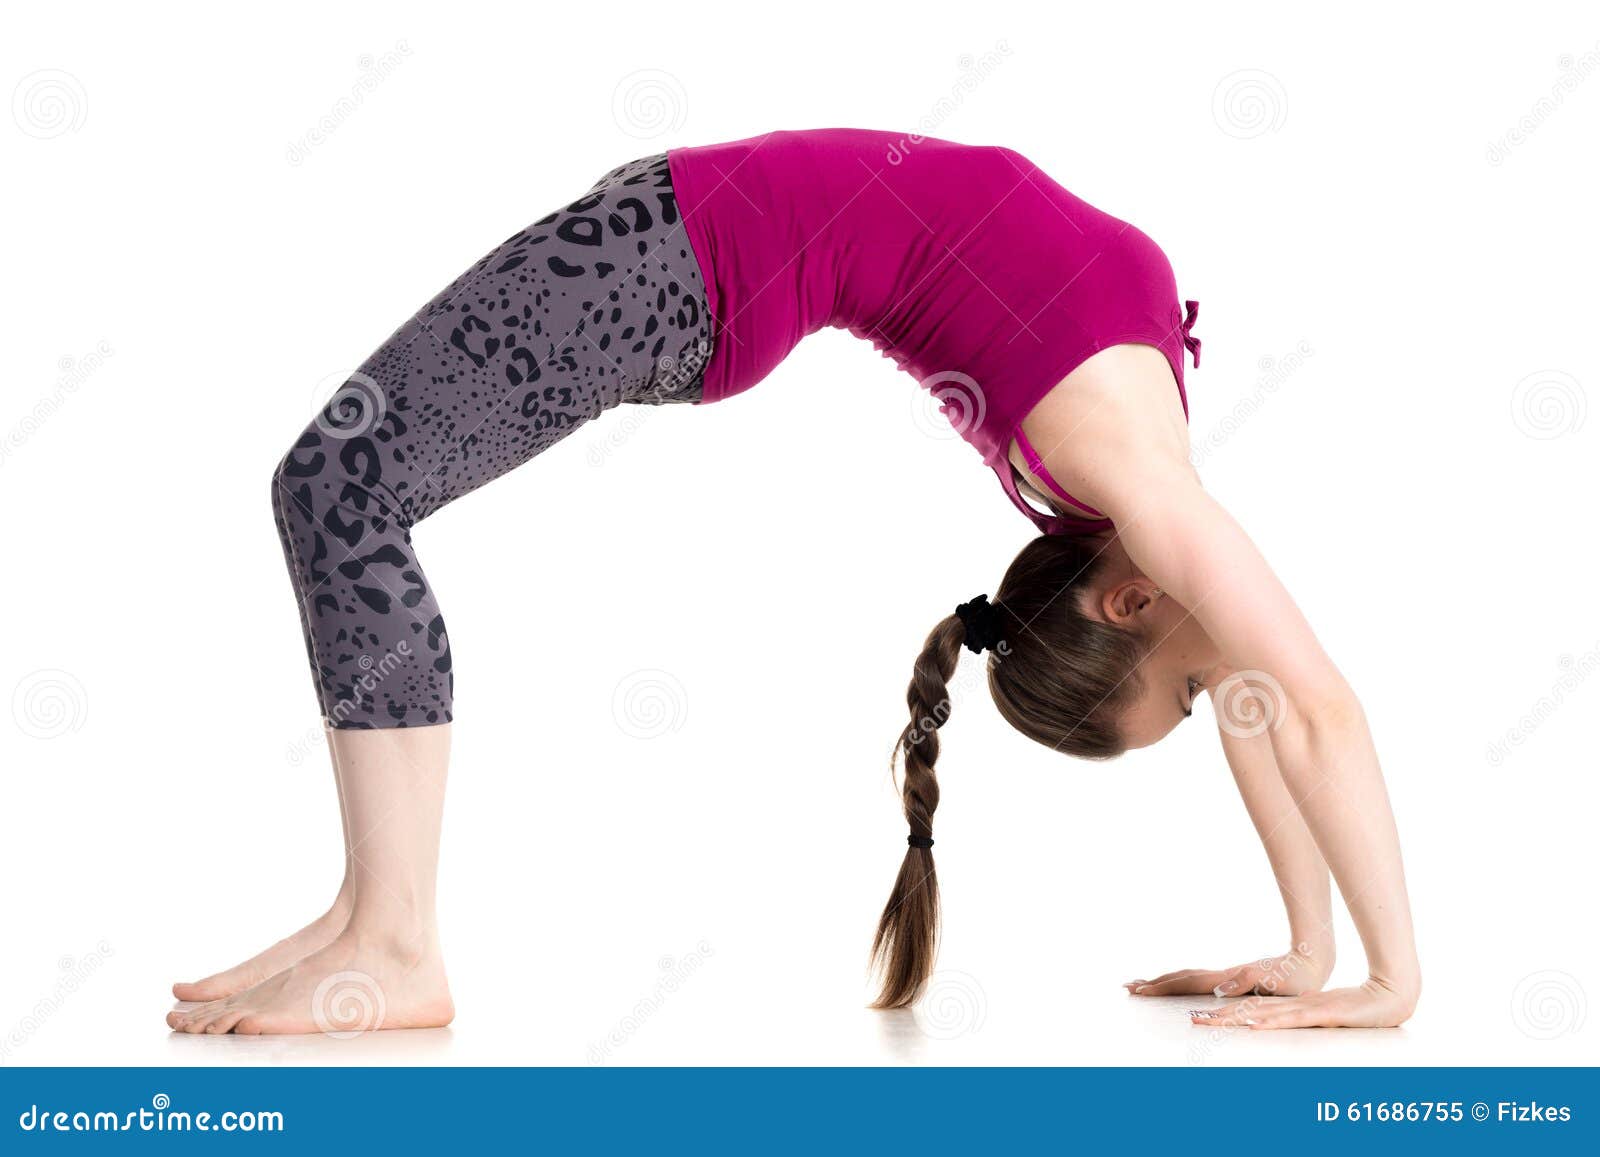 Bridge Pose Yoga: Benefits, Steps & Variations